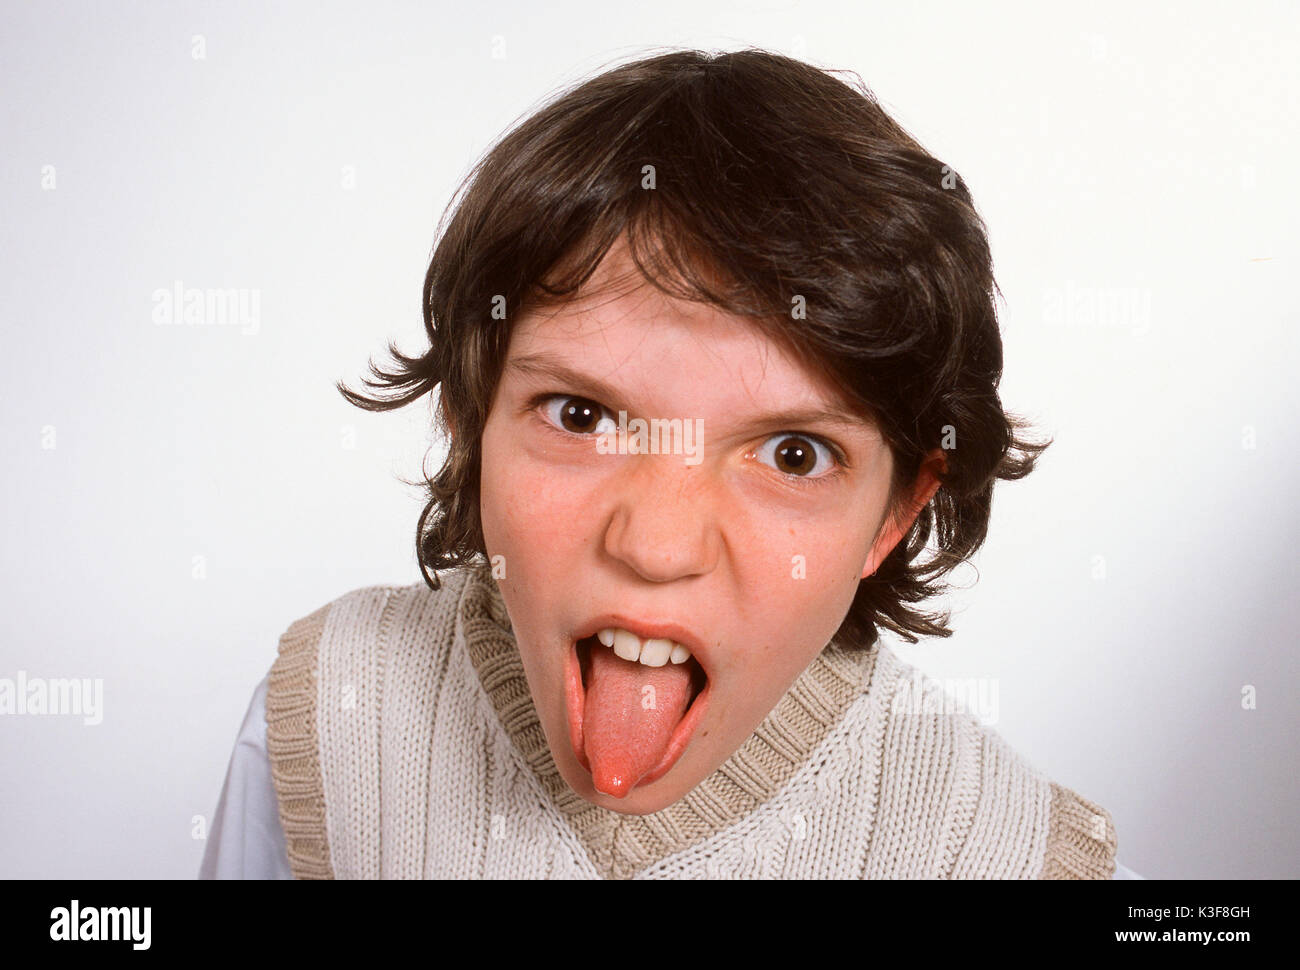 Boy sticks out tongue Stock Photo